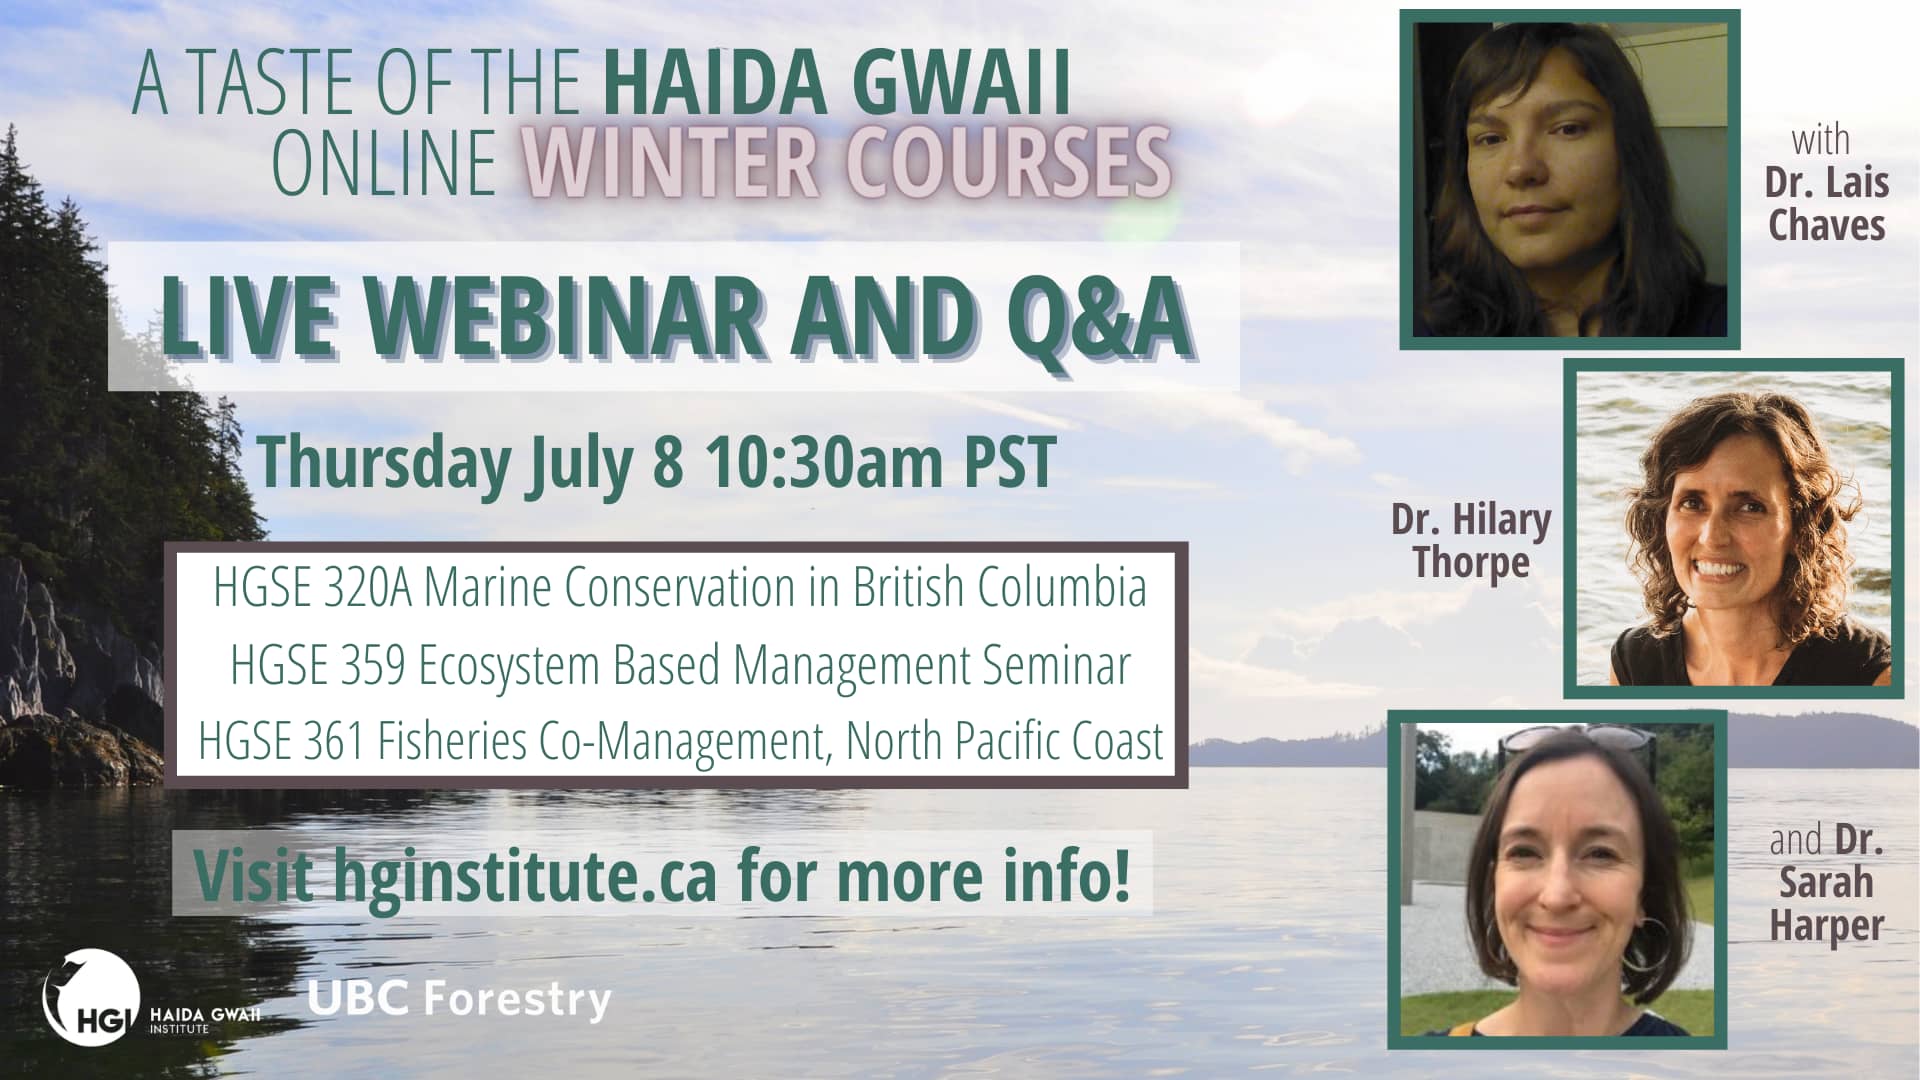 Live Webinar: A taste of the Haida Gwaii Online Winter Courses